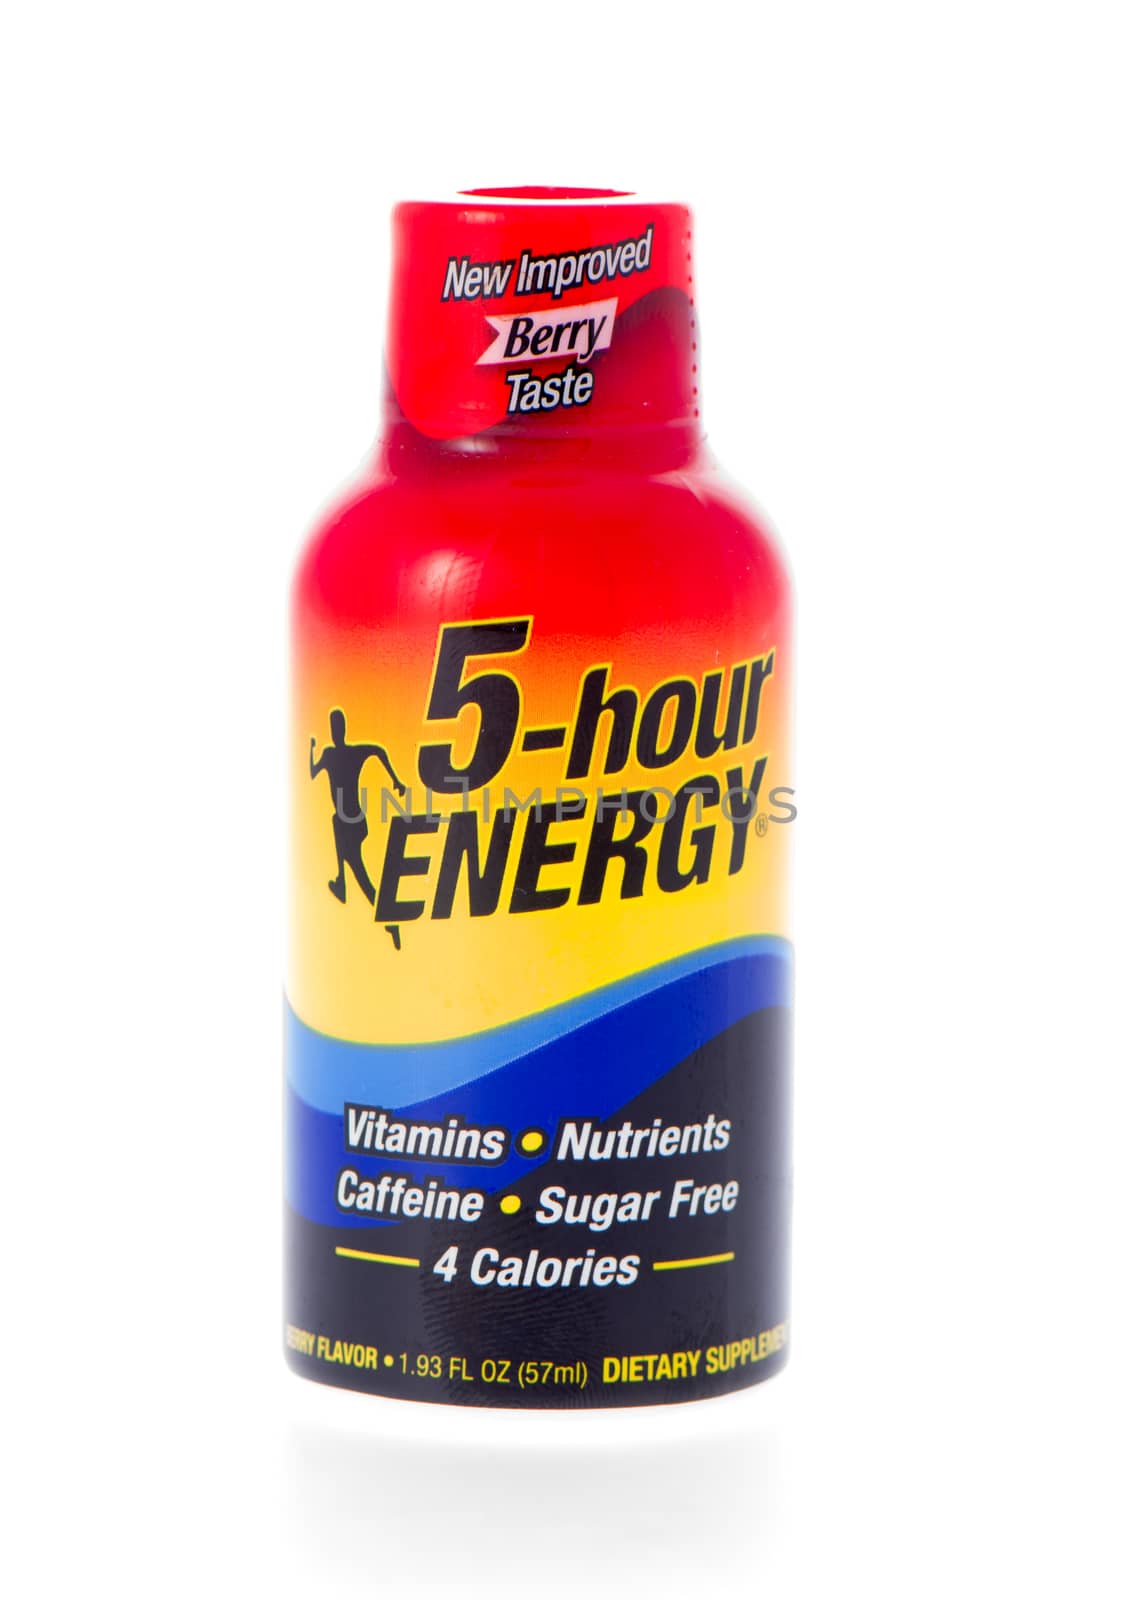 5-hour energy by homank76